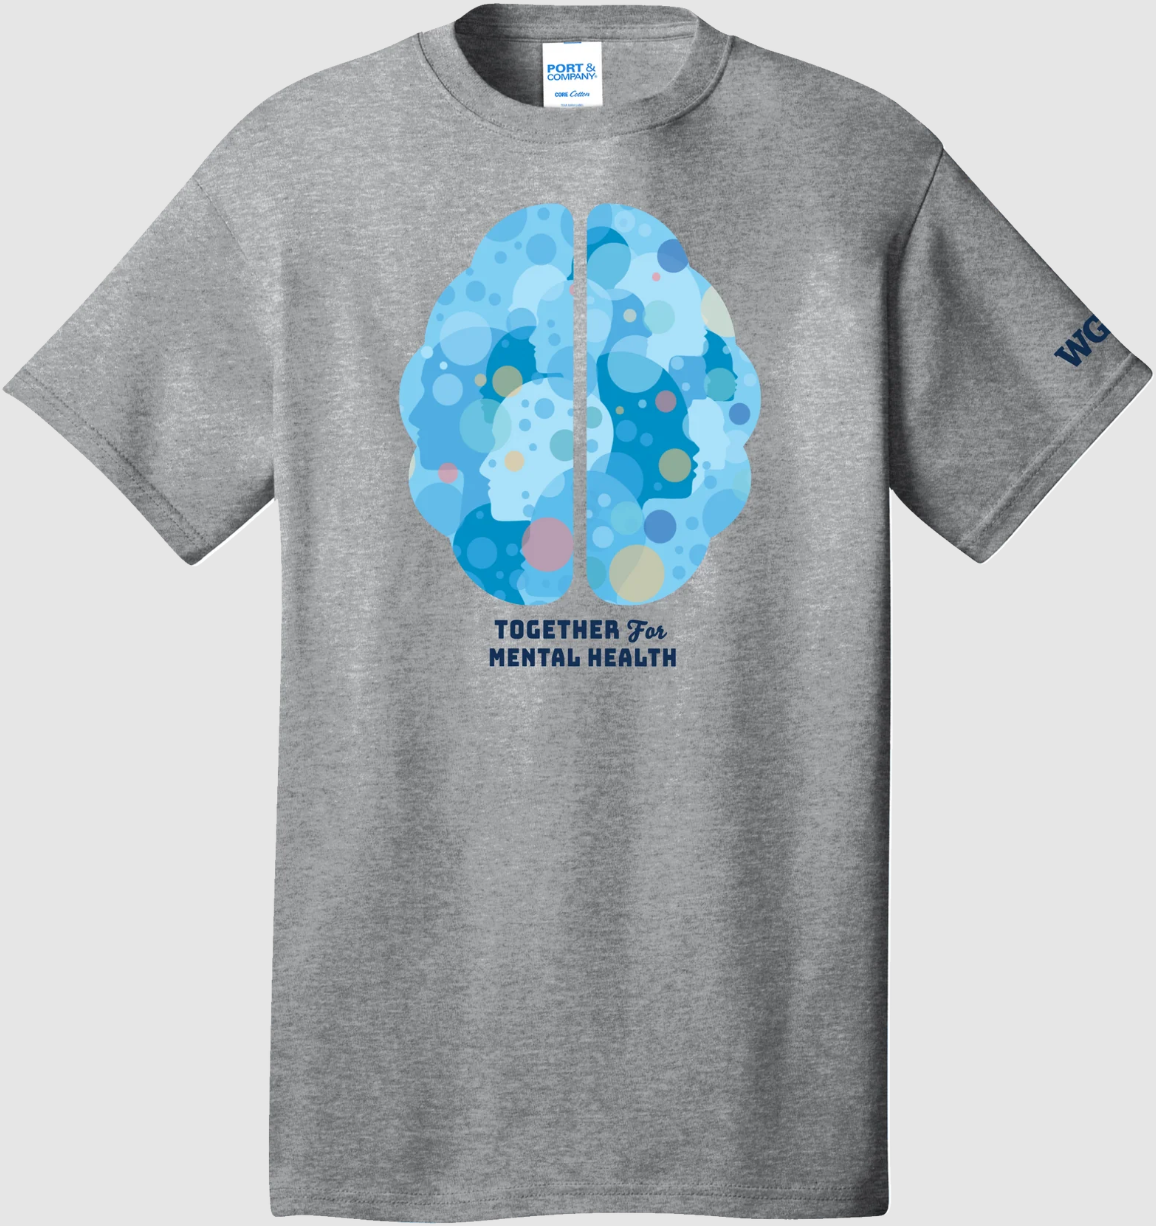 Mental Health Awareness Month shirt from WGU Store